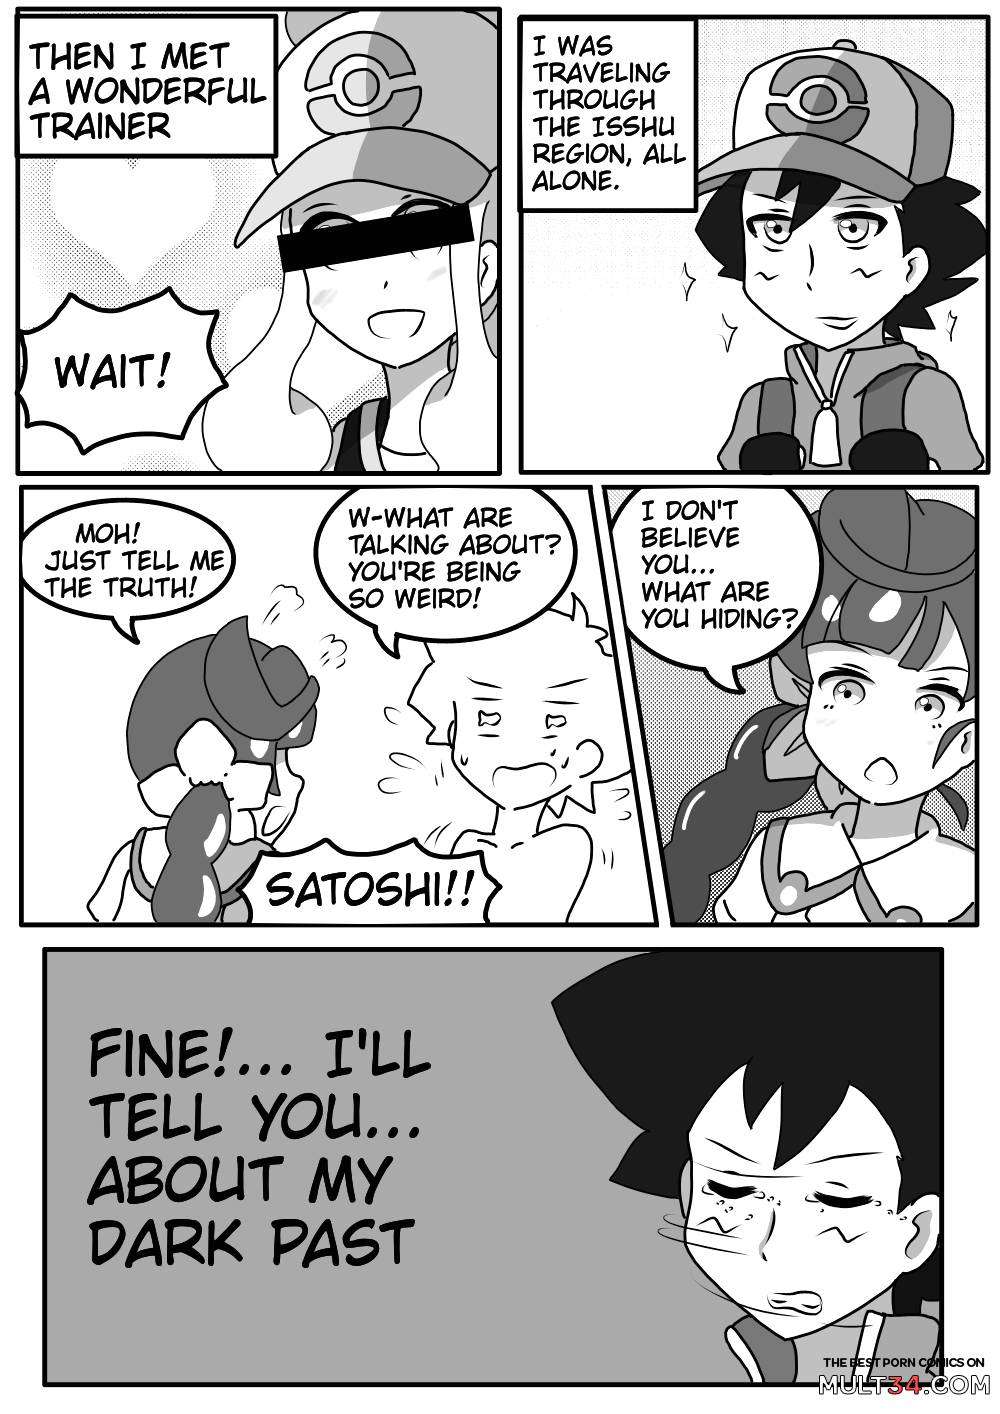 Satoshi and Koharu's Daily talk 4 page 4